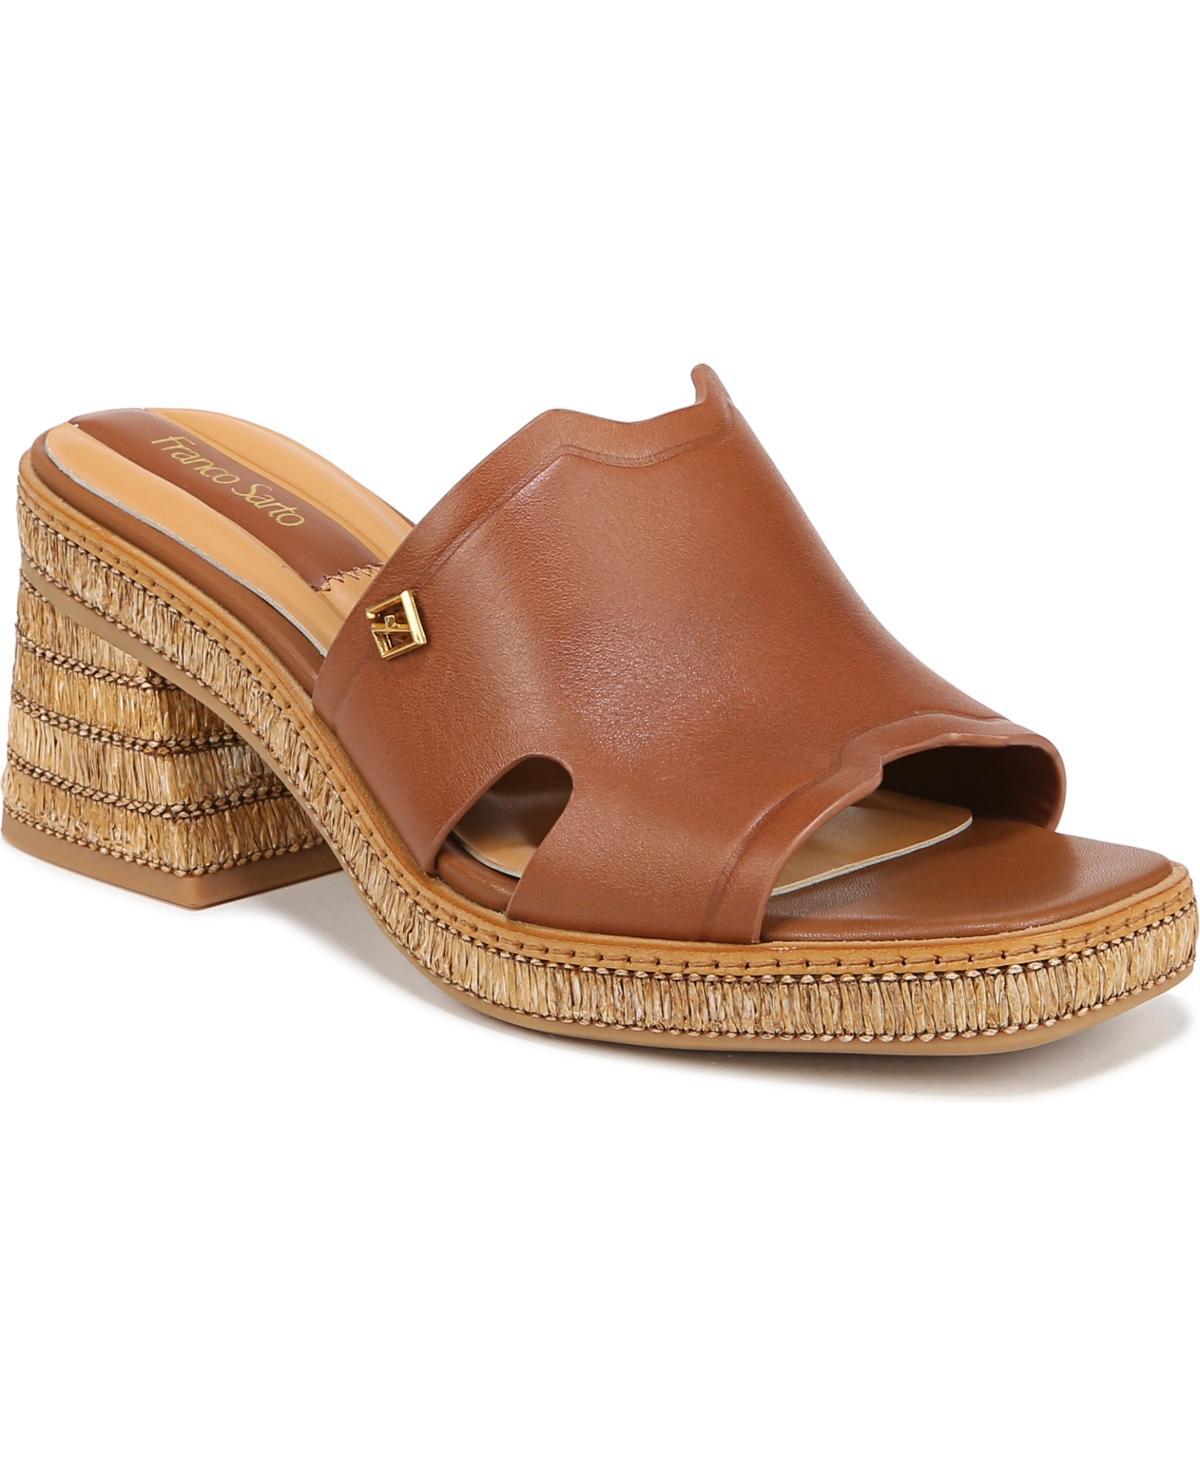 Franco Sarto Florence Slide Sandals Product Image